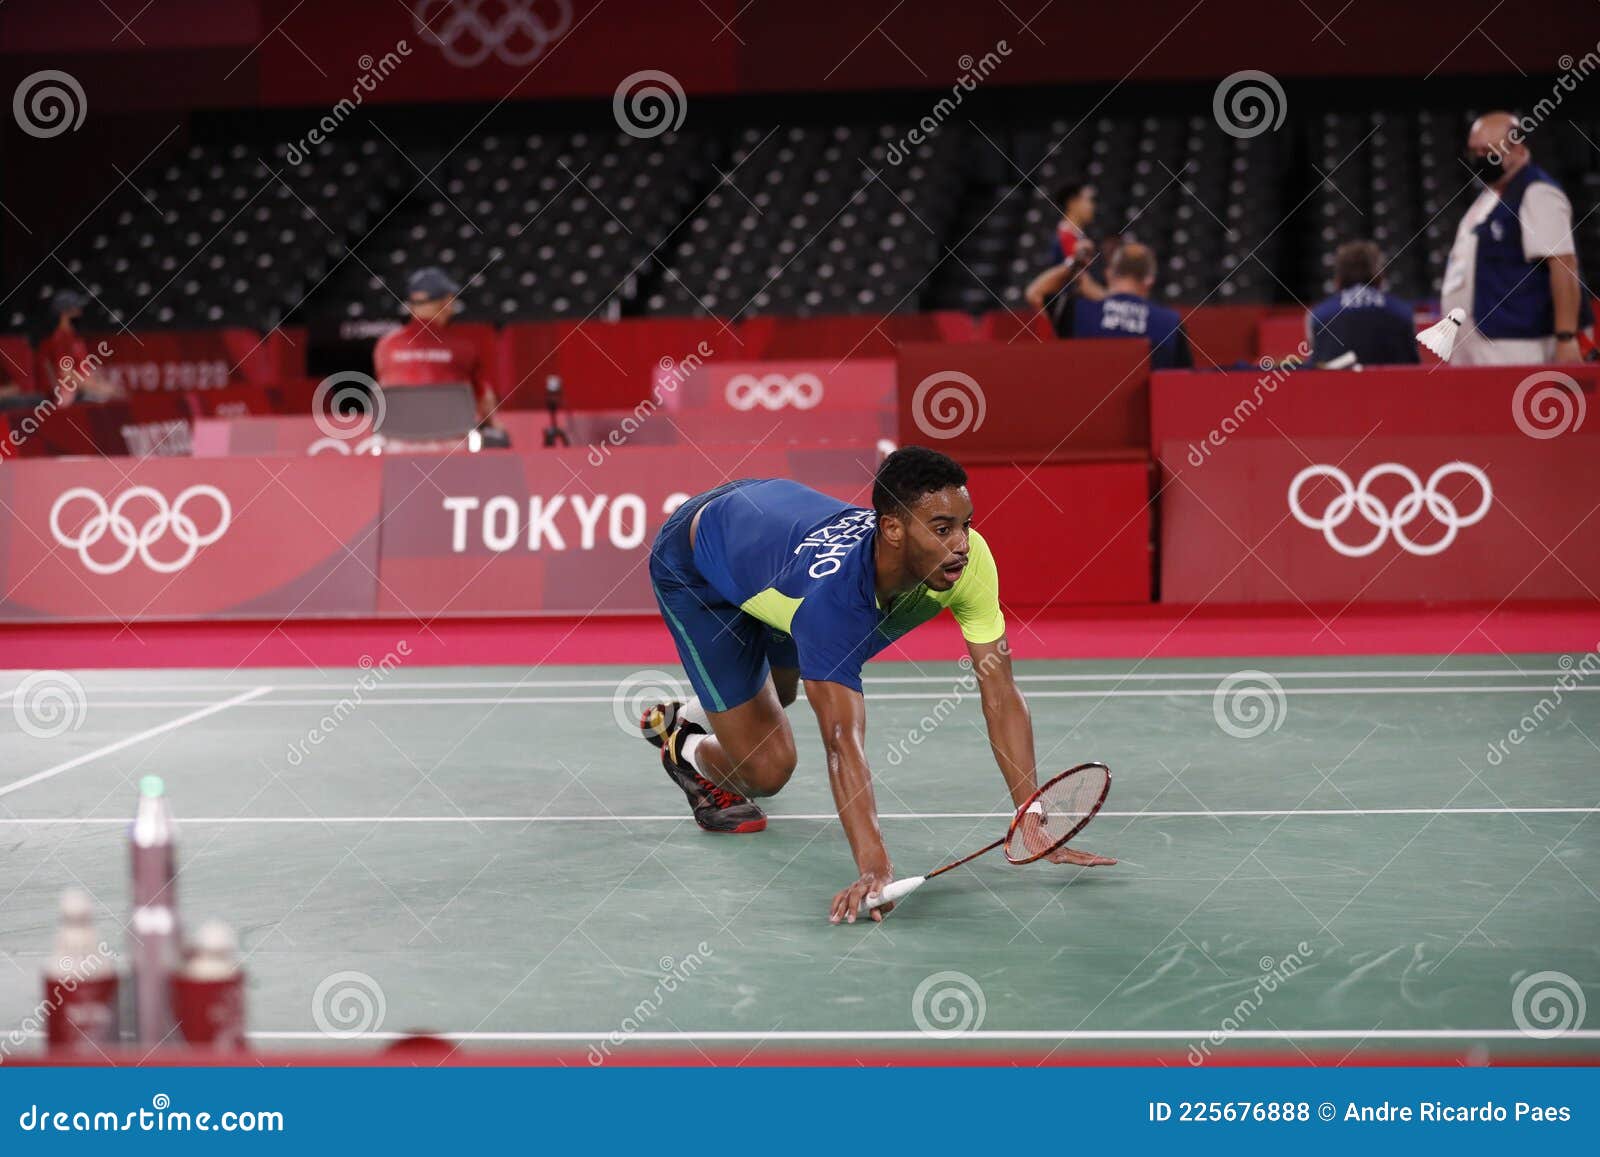 Olympics 2021 badminton Badminton Tokyo